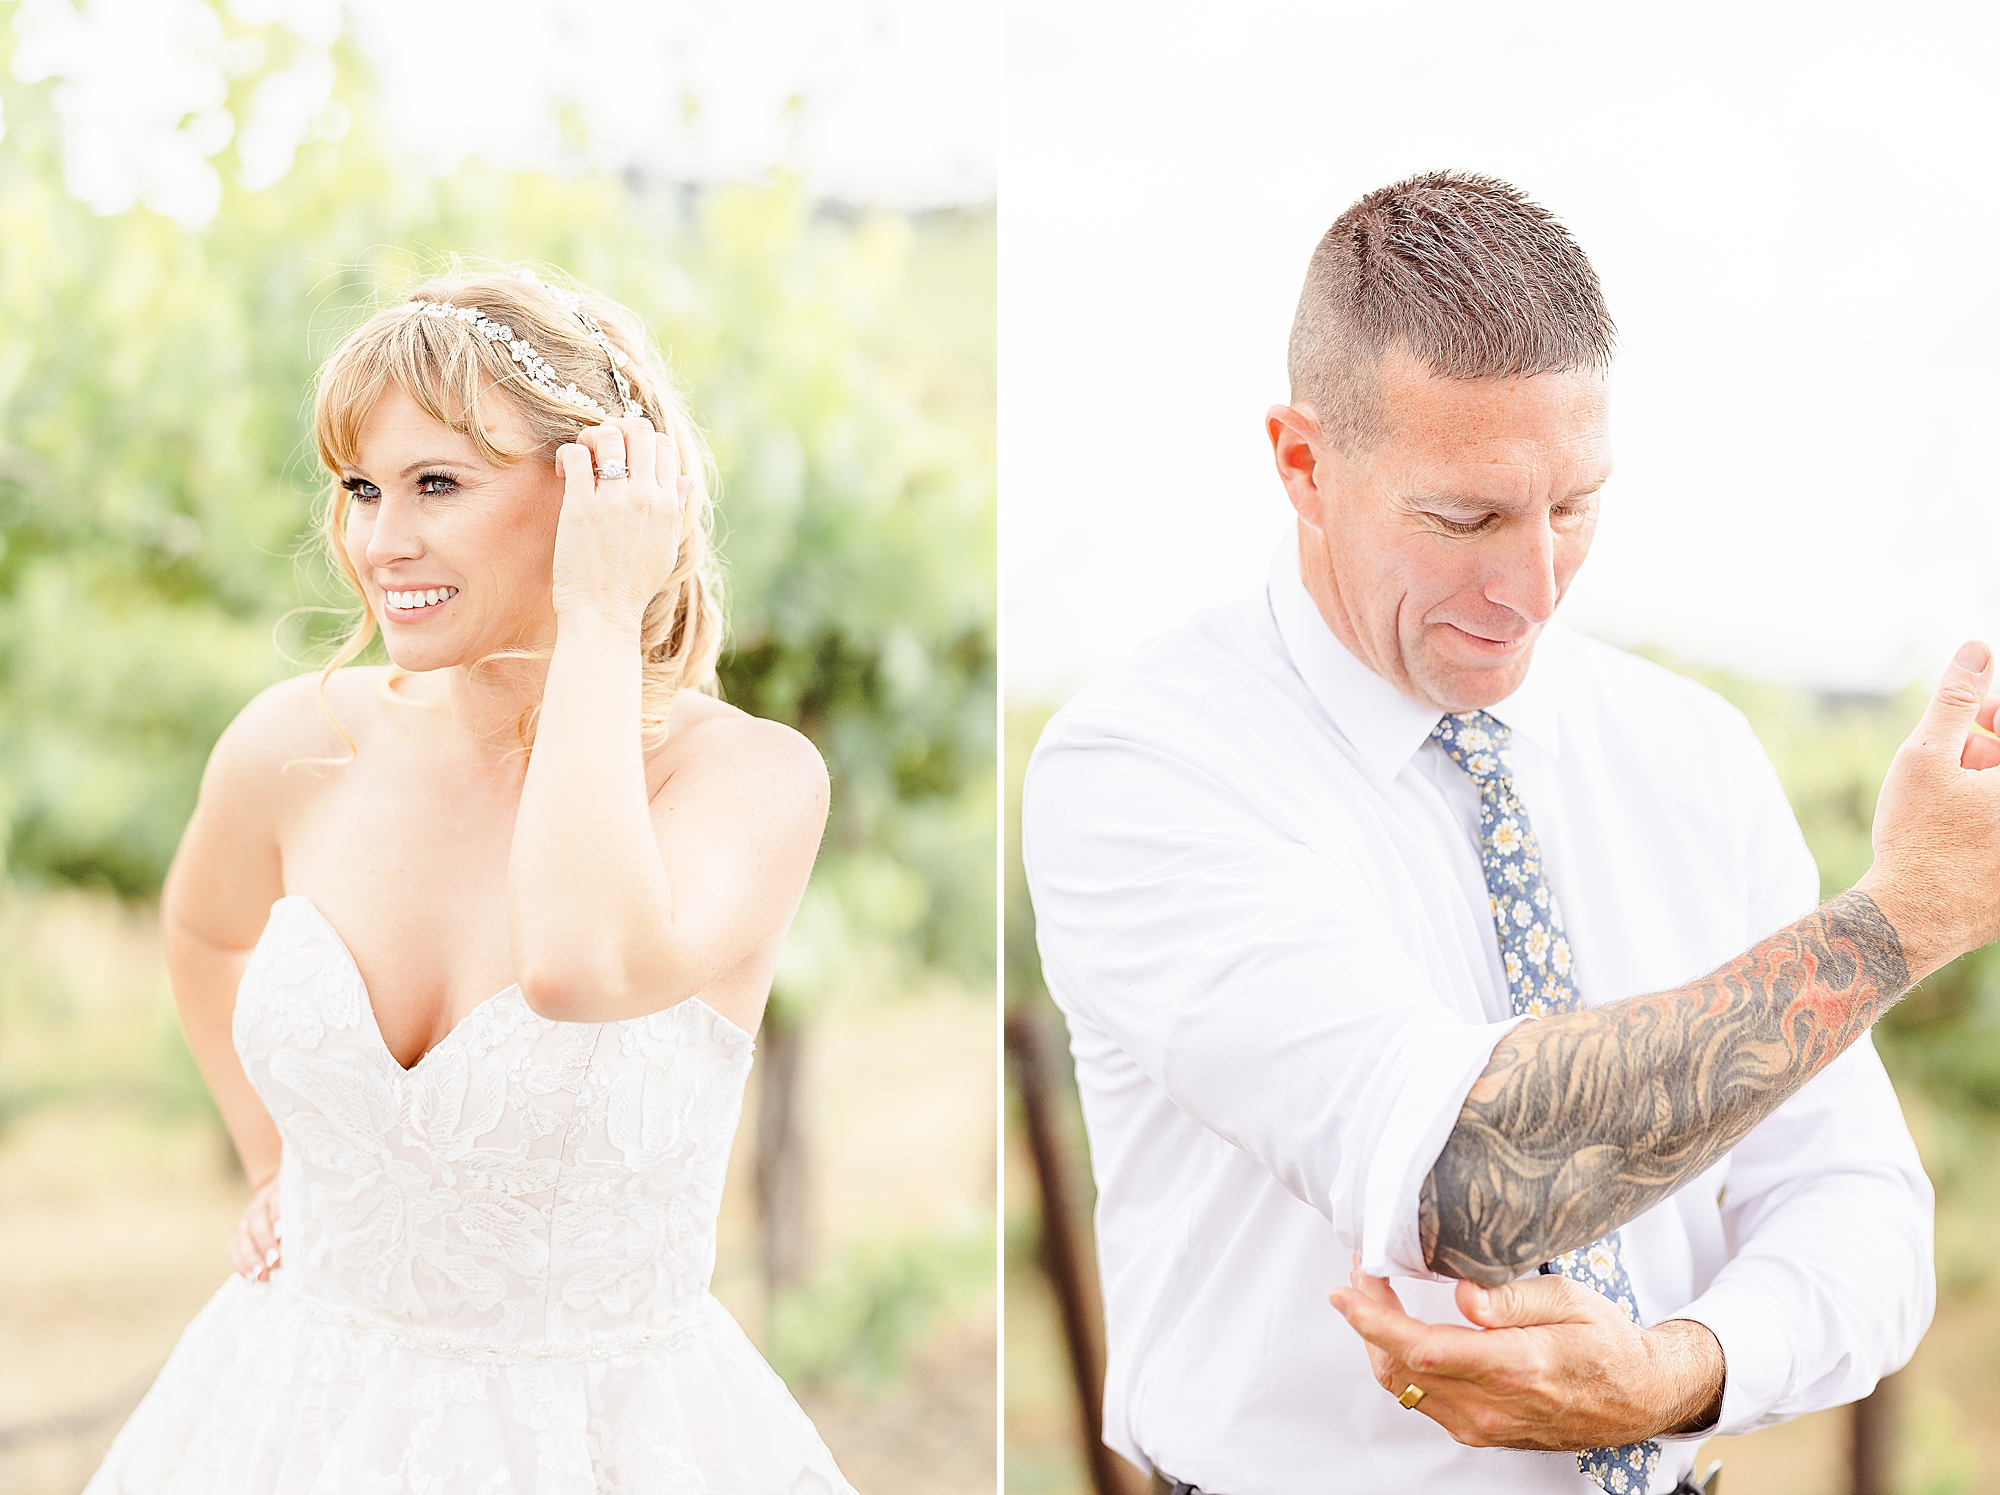 Tattoo and weddings